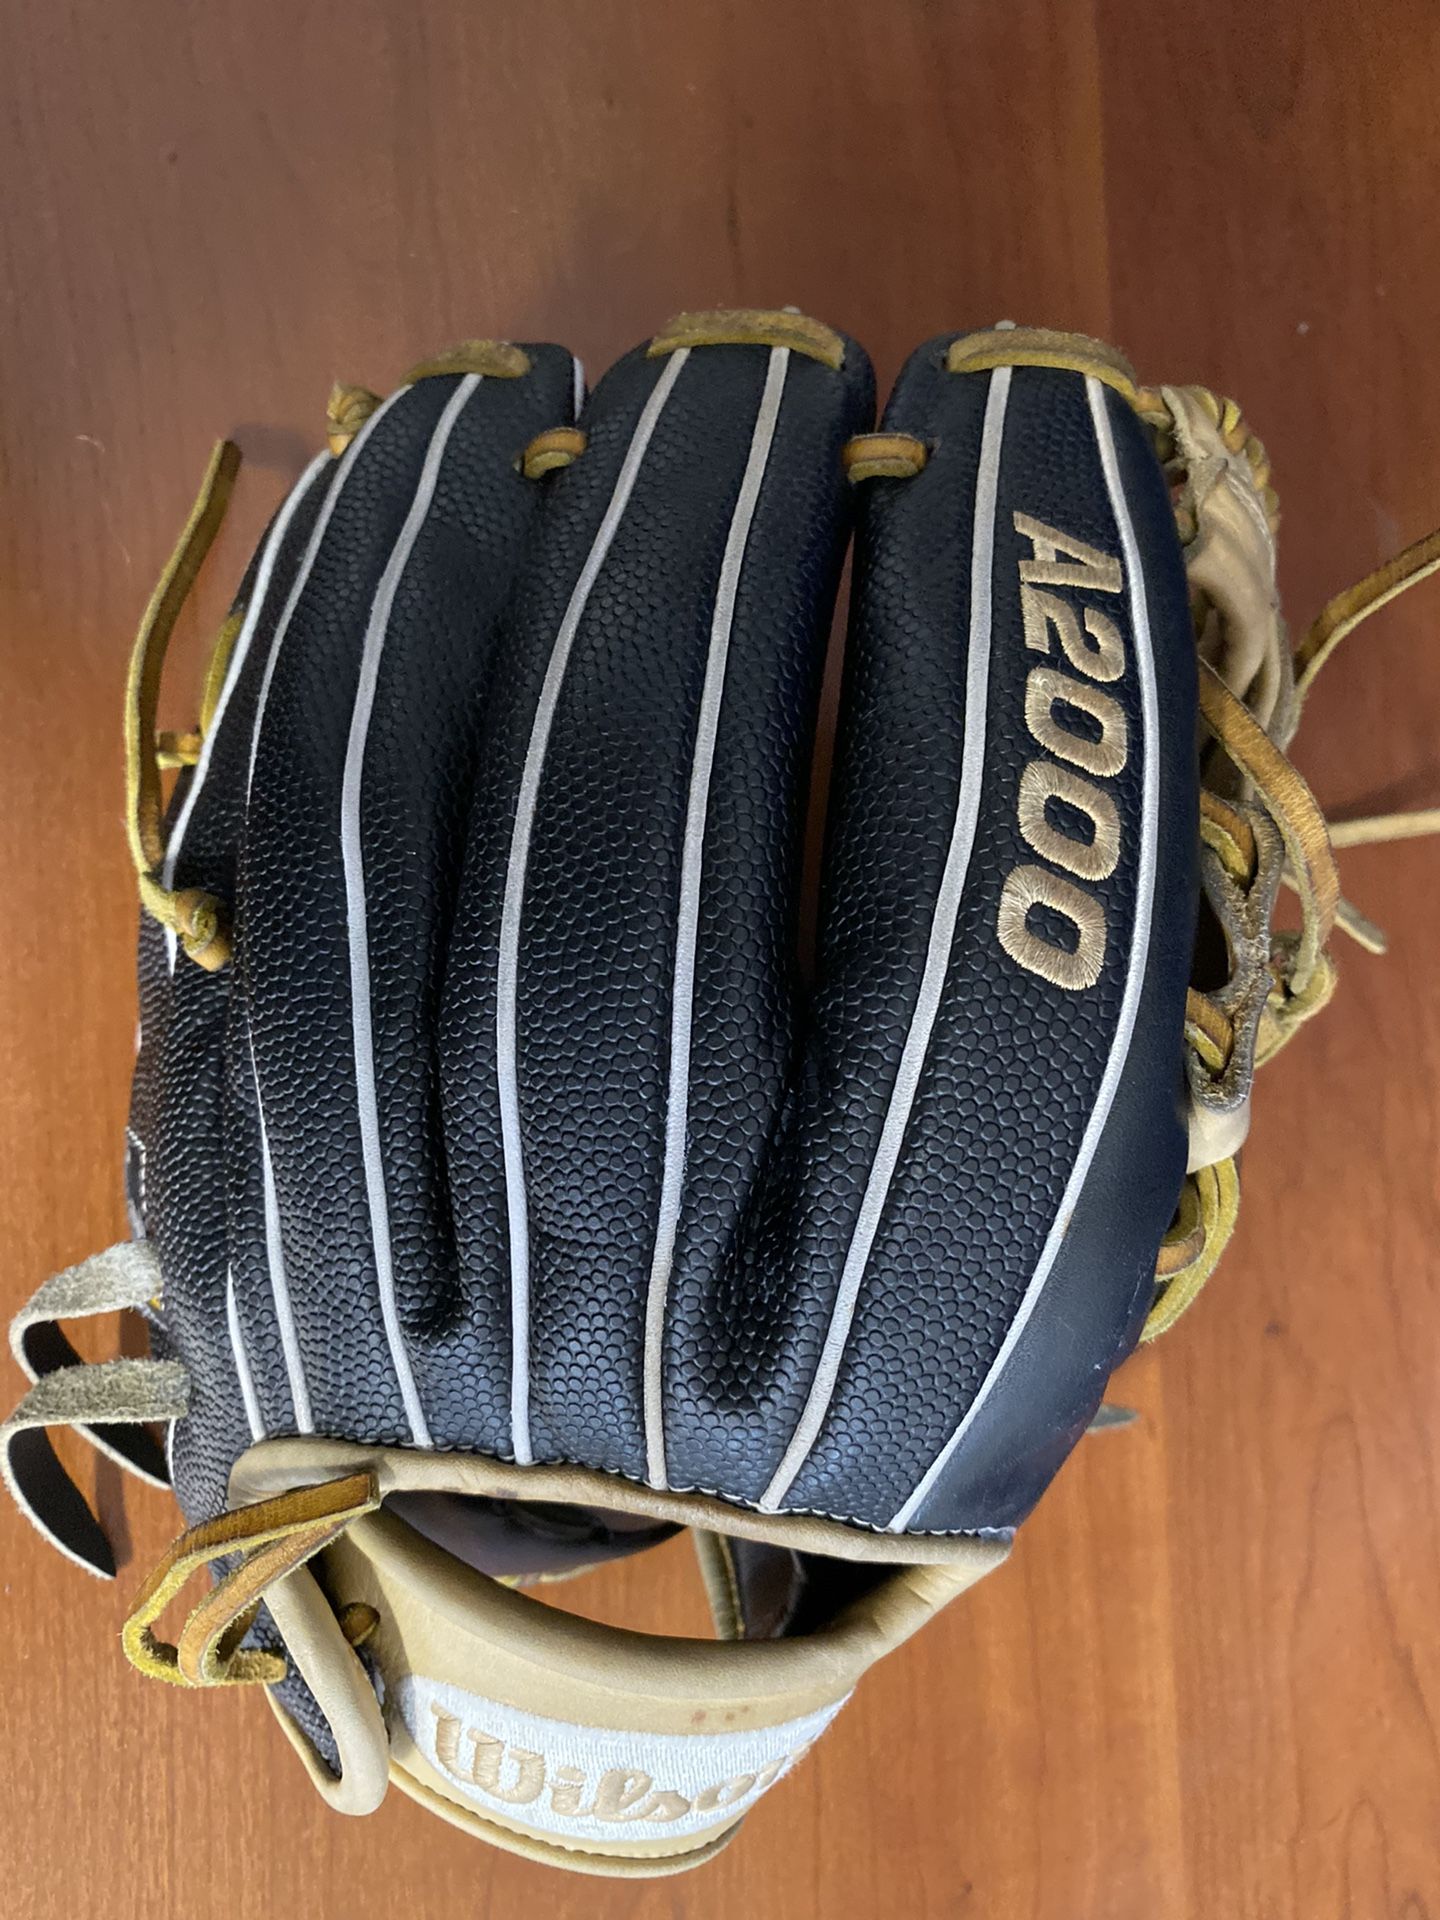 Wilson A2000 DP15 Baseball Glove 1 season old